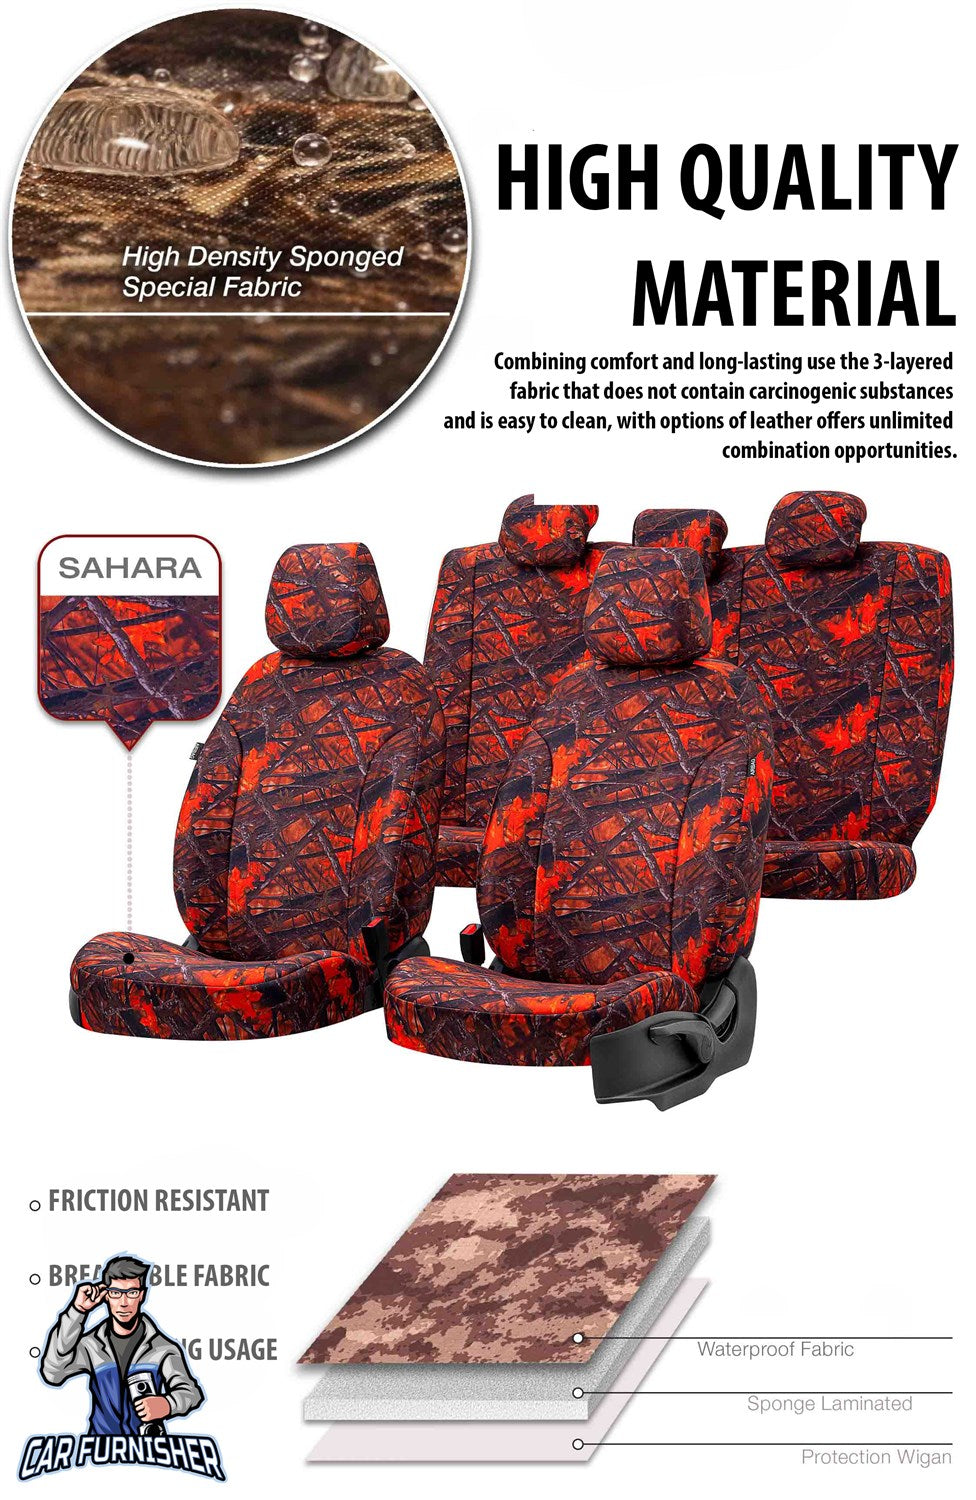 Bmw X3 Car Seat Cover 2003-2017 E83/F25 Custom Camouflage Design Mojave Camo Full Set (5 Seats + Handrest) Fabric